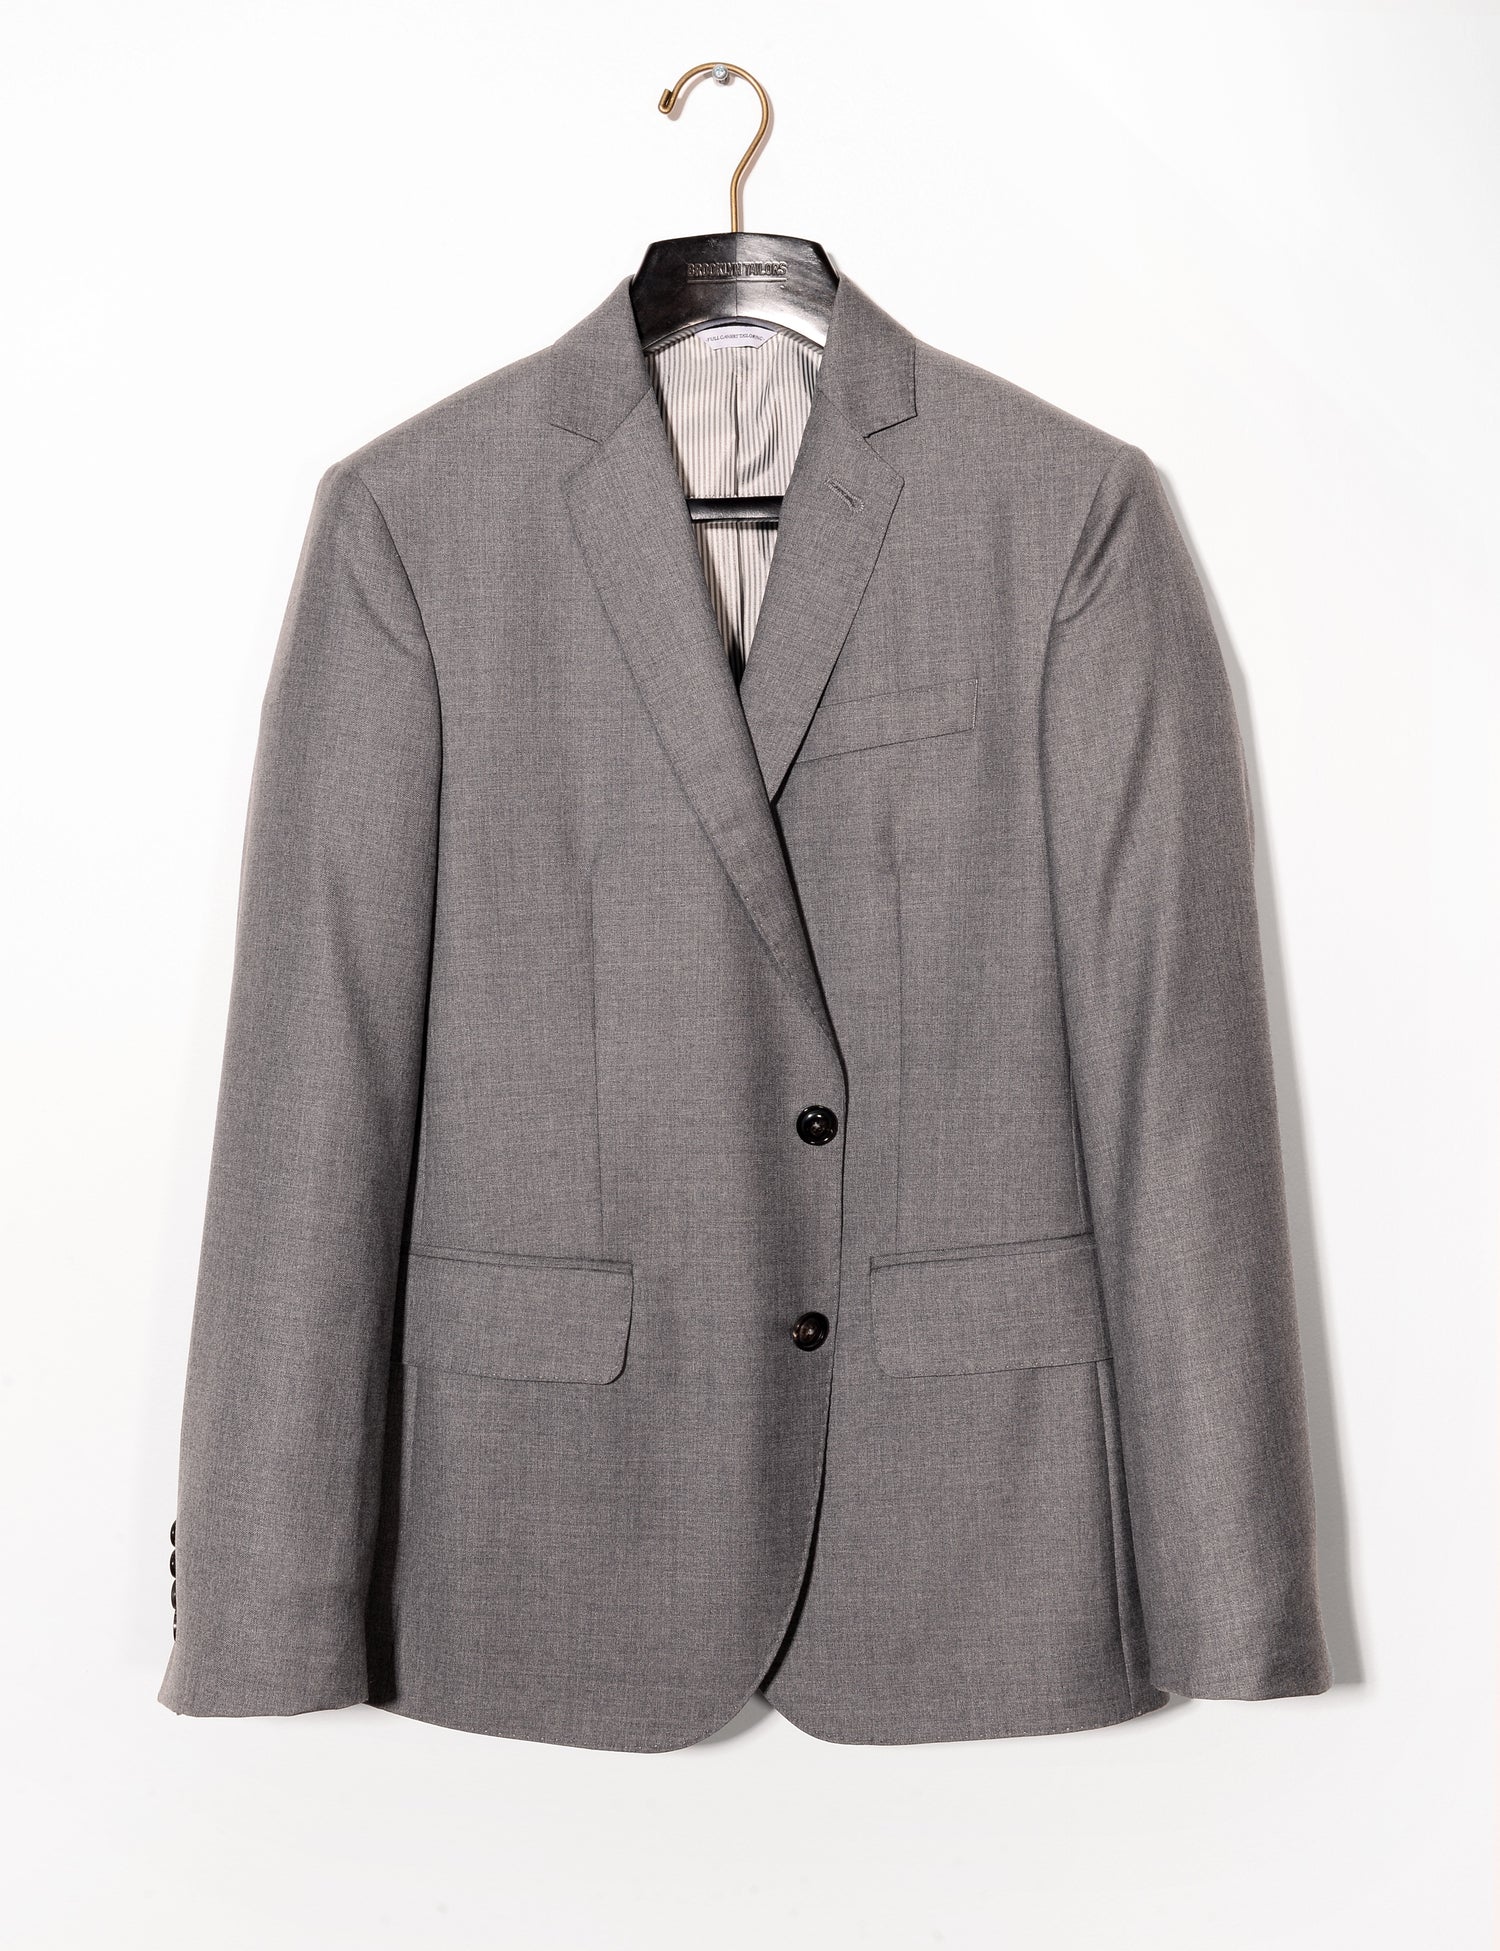 Brooklyn Tailors BKT50 Tailored Jacket in Super 110s Twill - Dove Gray full length shot on hanger